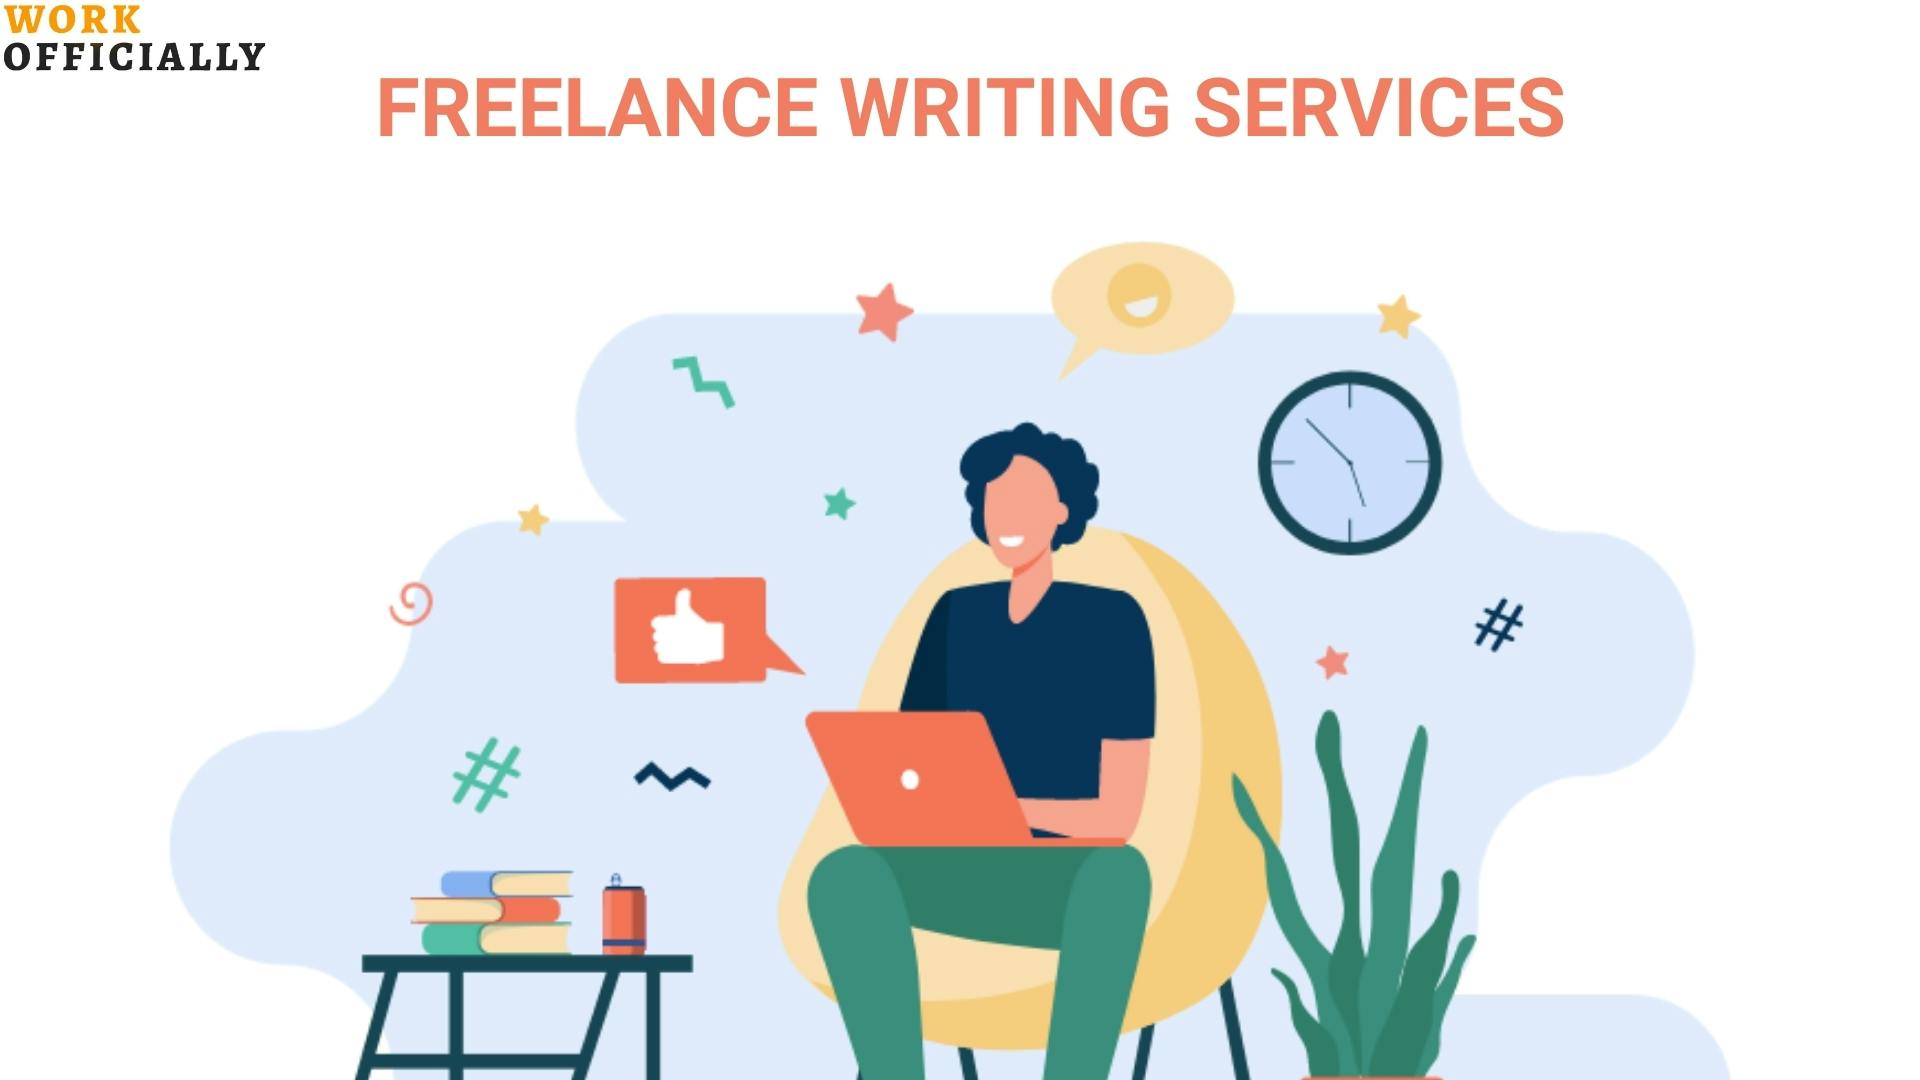 FREELANCE-WRITING-SERVICES.jpg